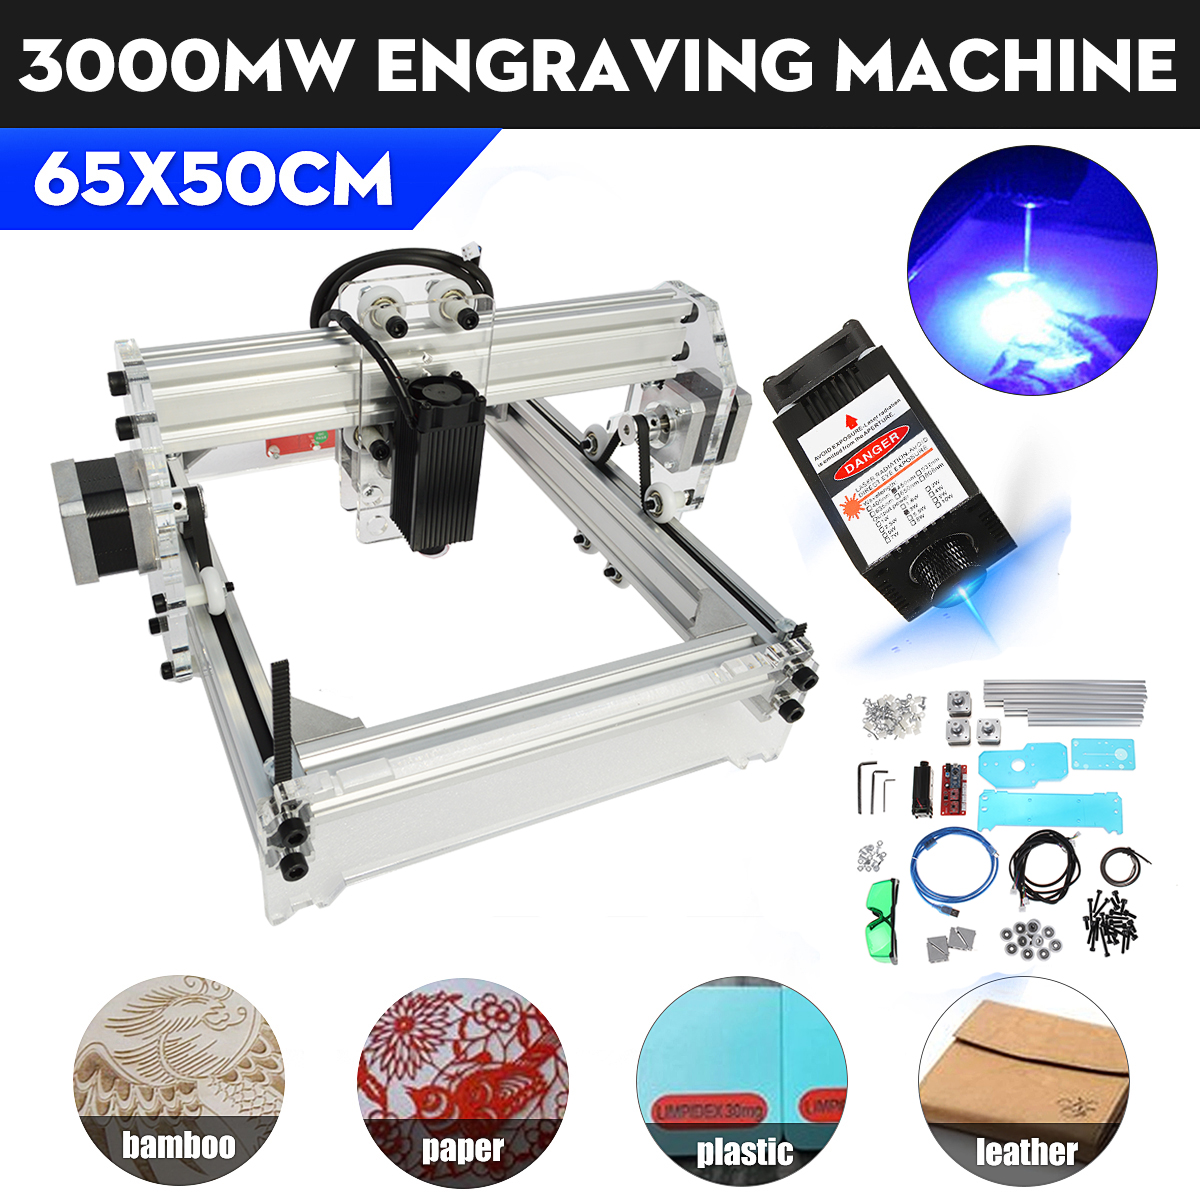 

3W 65*50CM Engraving Machine AC110-220V to DC12V Mini DIY Desktop Laser Engraver Cutting Machine Laser Etcher CNC Print Image